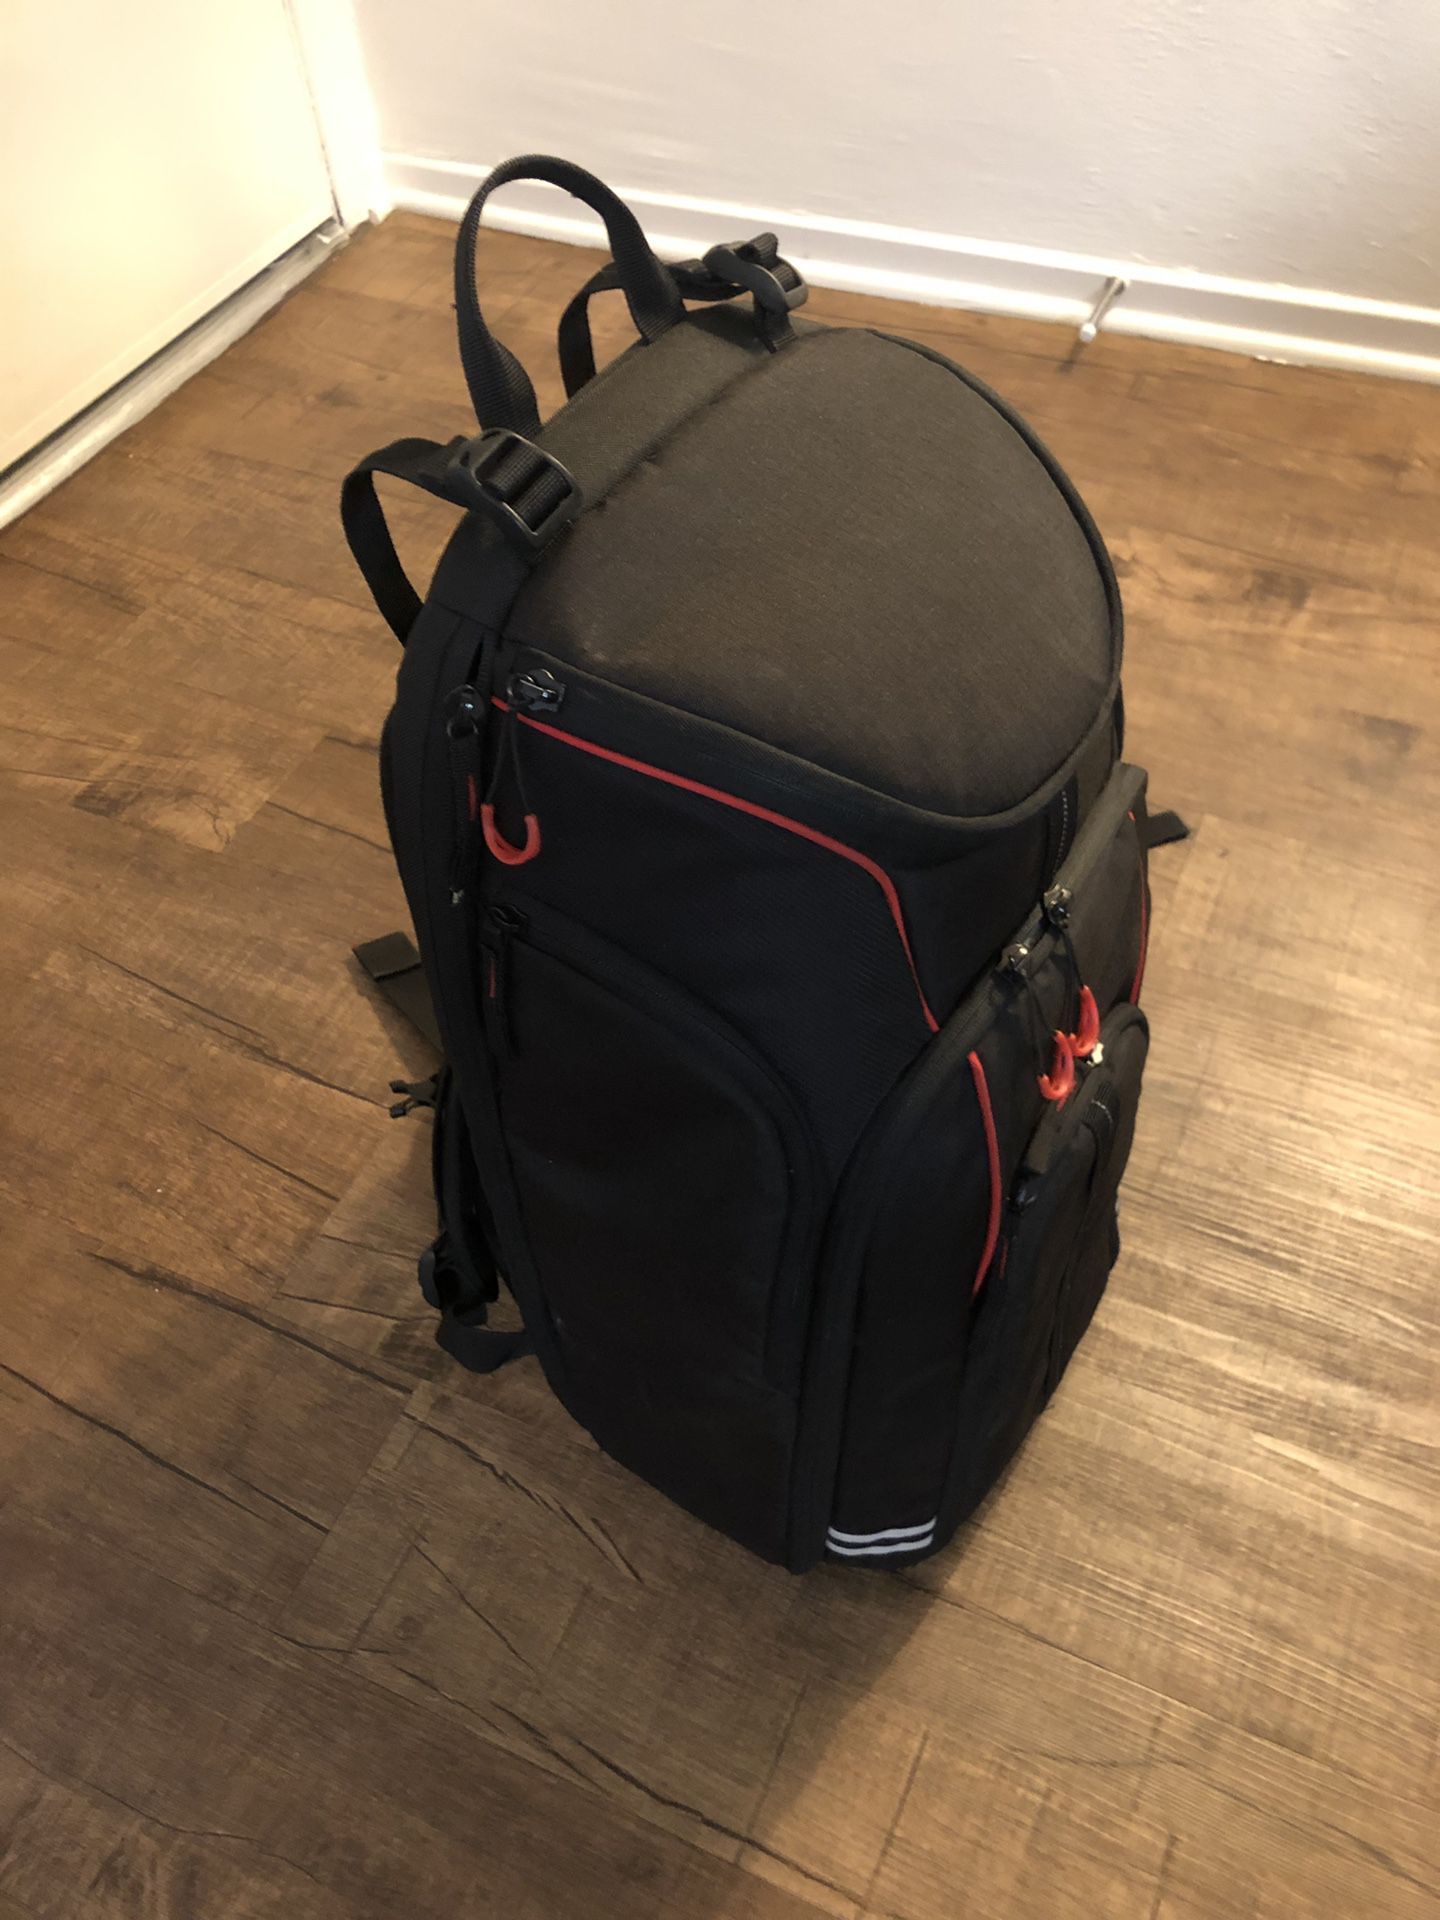 Manfrotto DJI Phantom Drone backpack